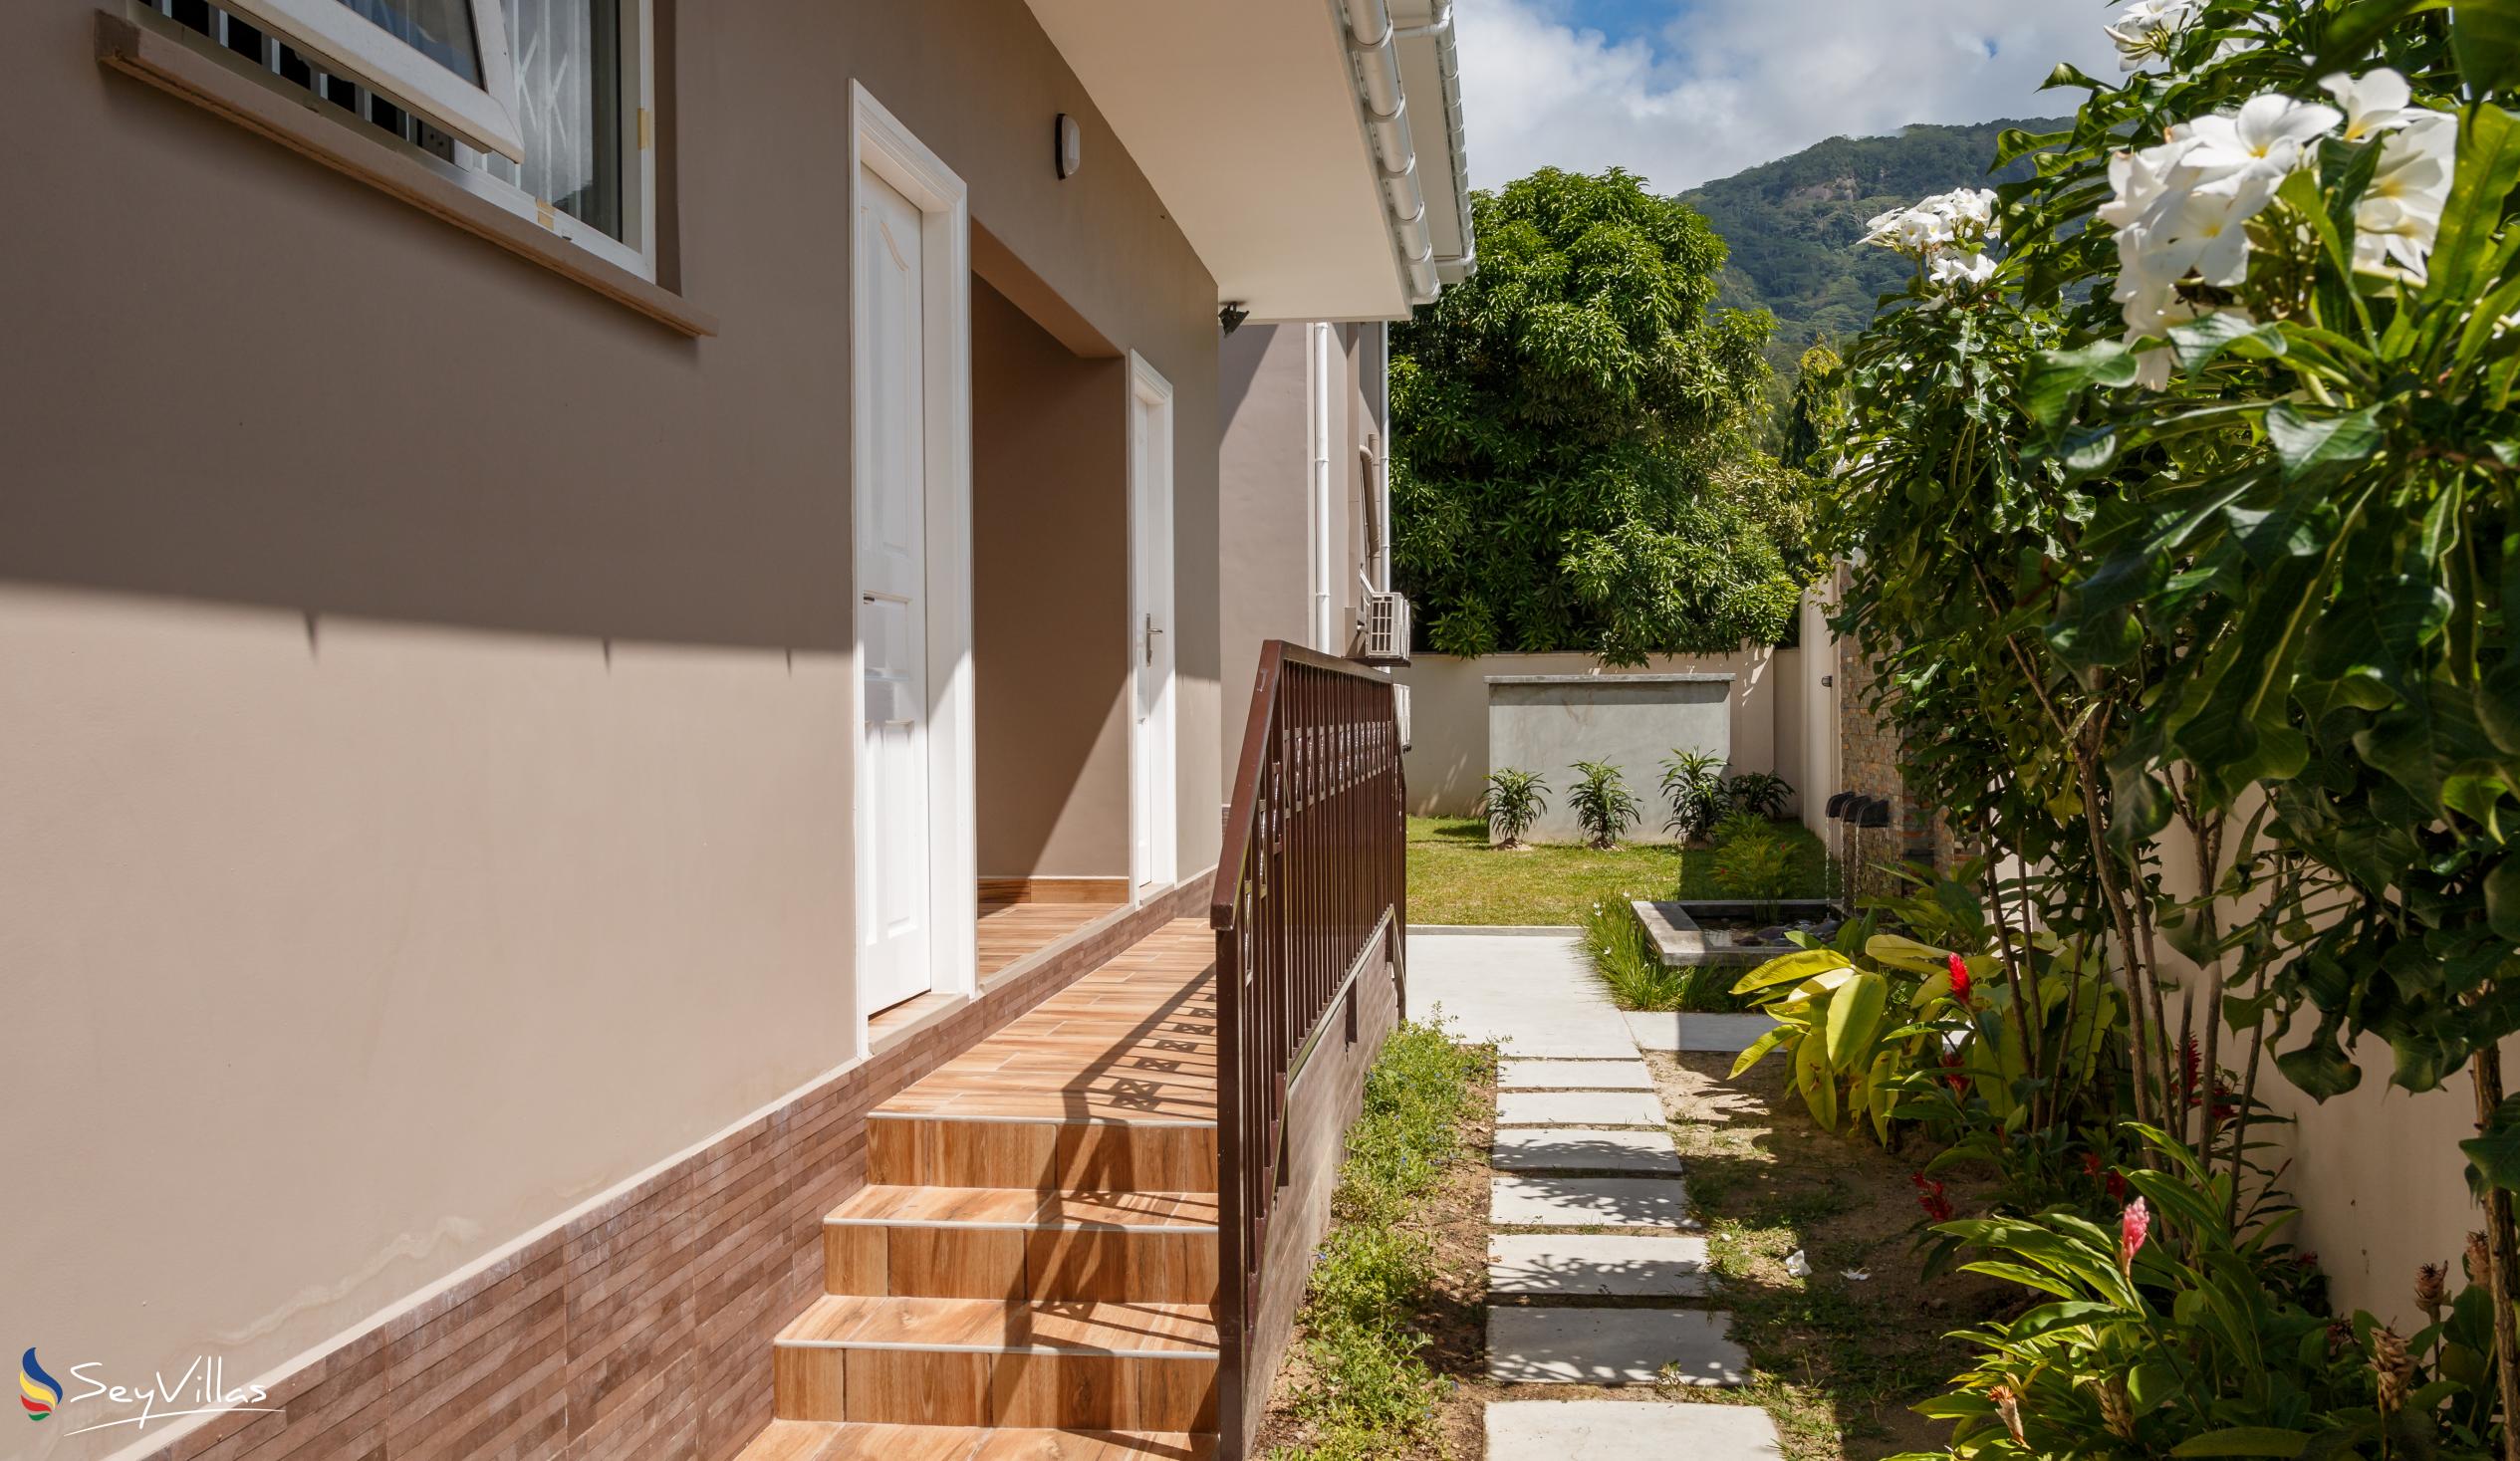 Foto 10: Residence Argine - Aussenbereich - Mahé (Seychellen)